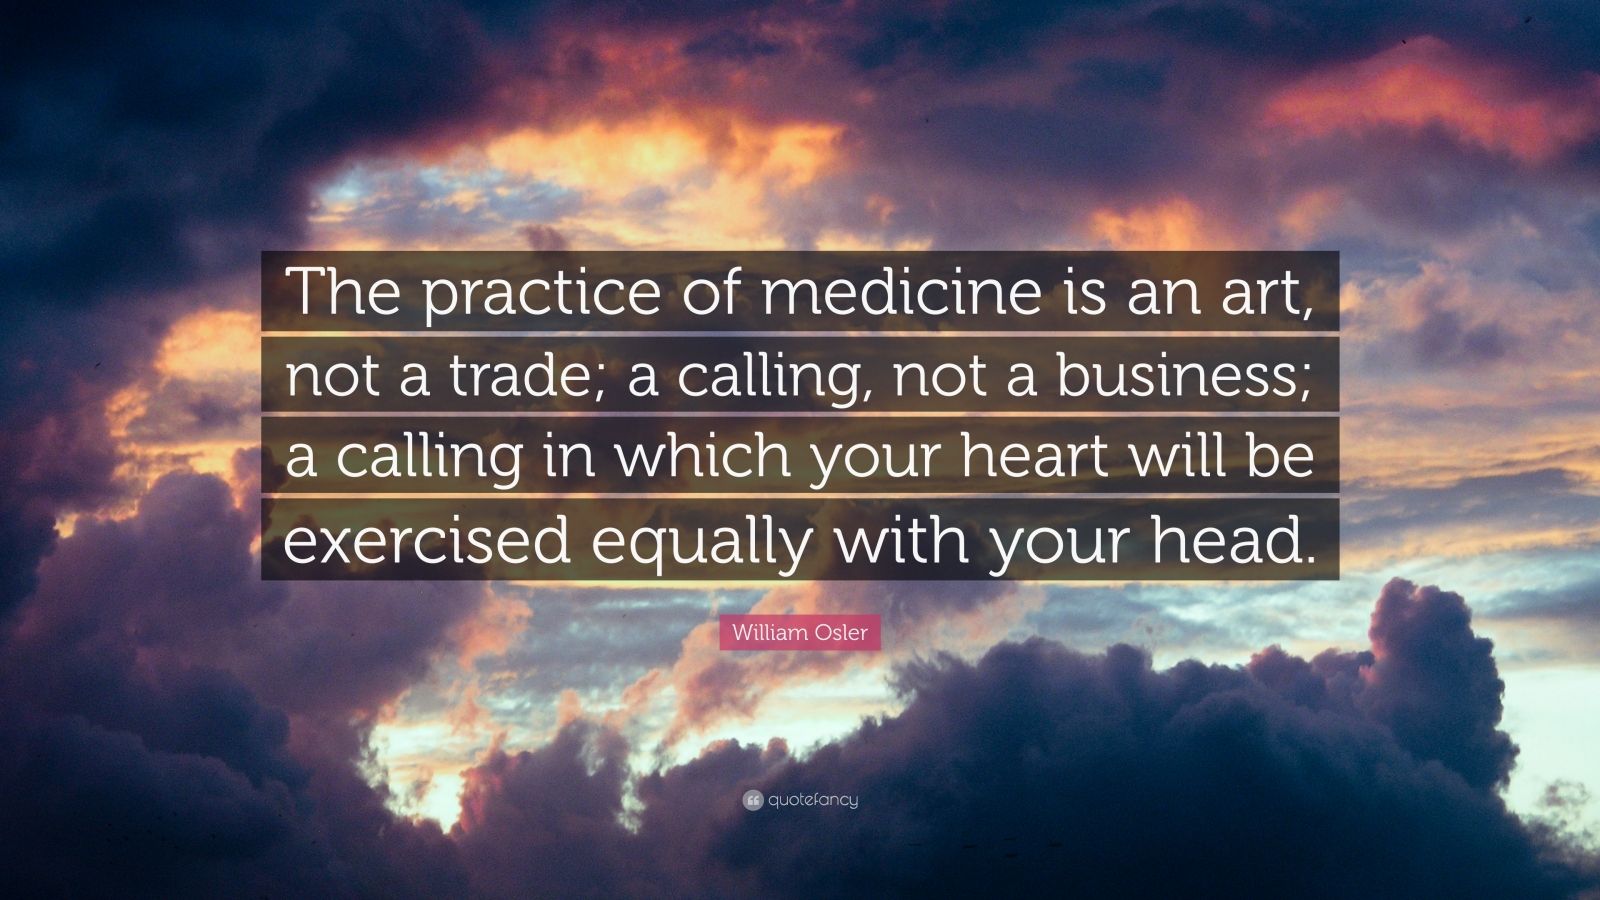 William Osler Quote “The practice of medicine is an art